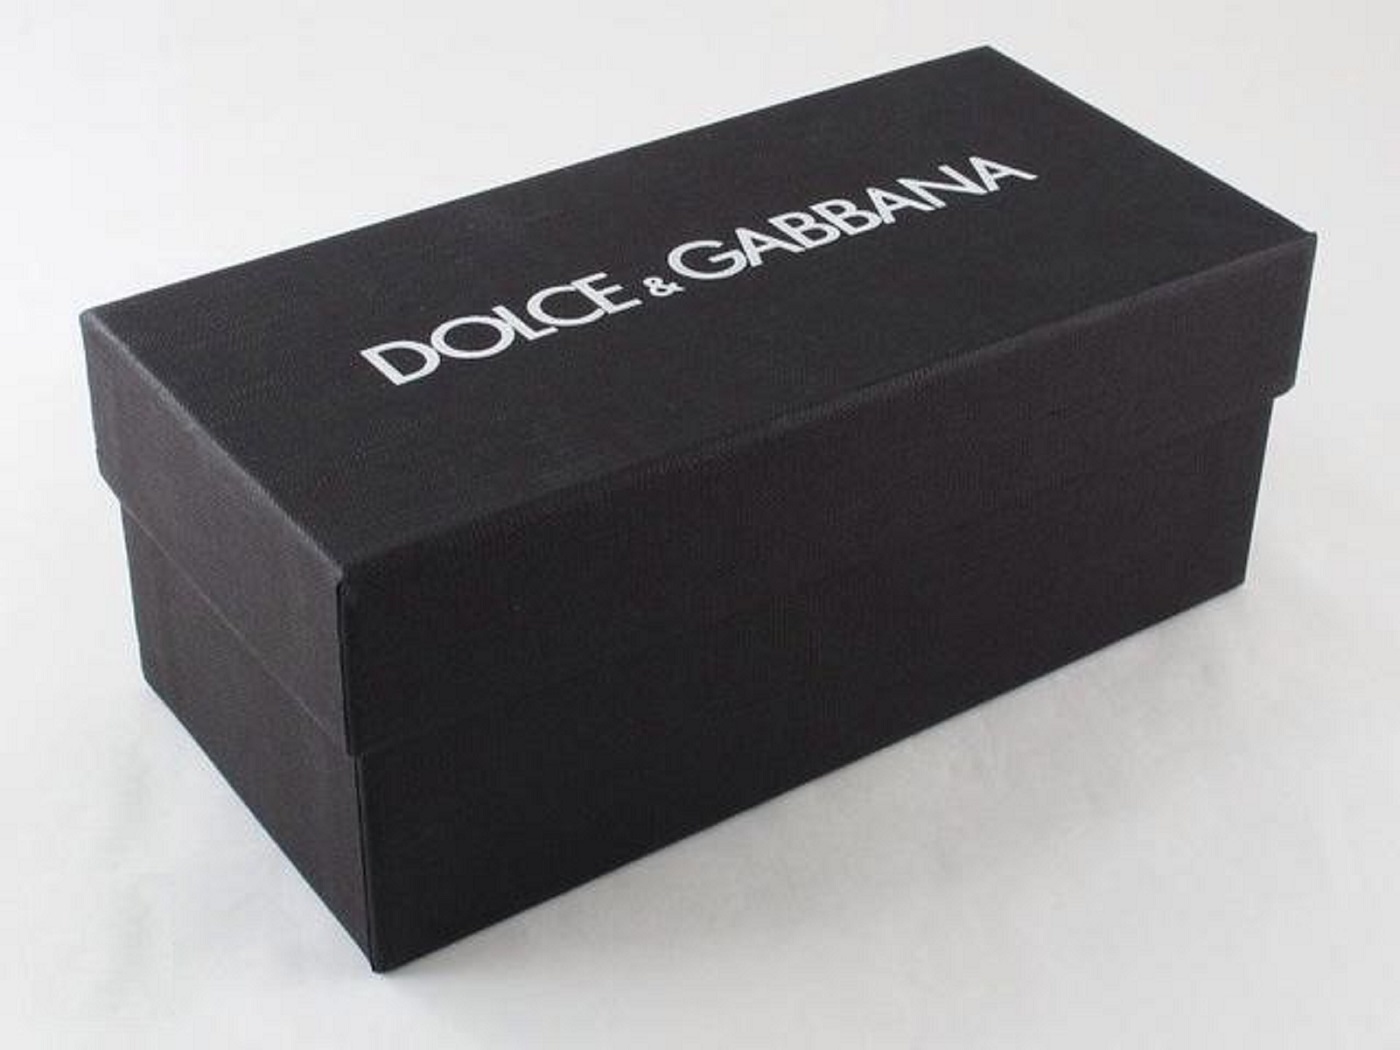 Spot fake Dolce & Gabbana sunglasses - check the box and case